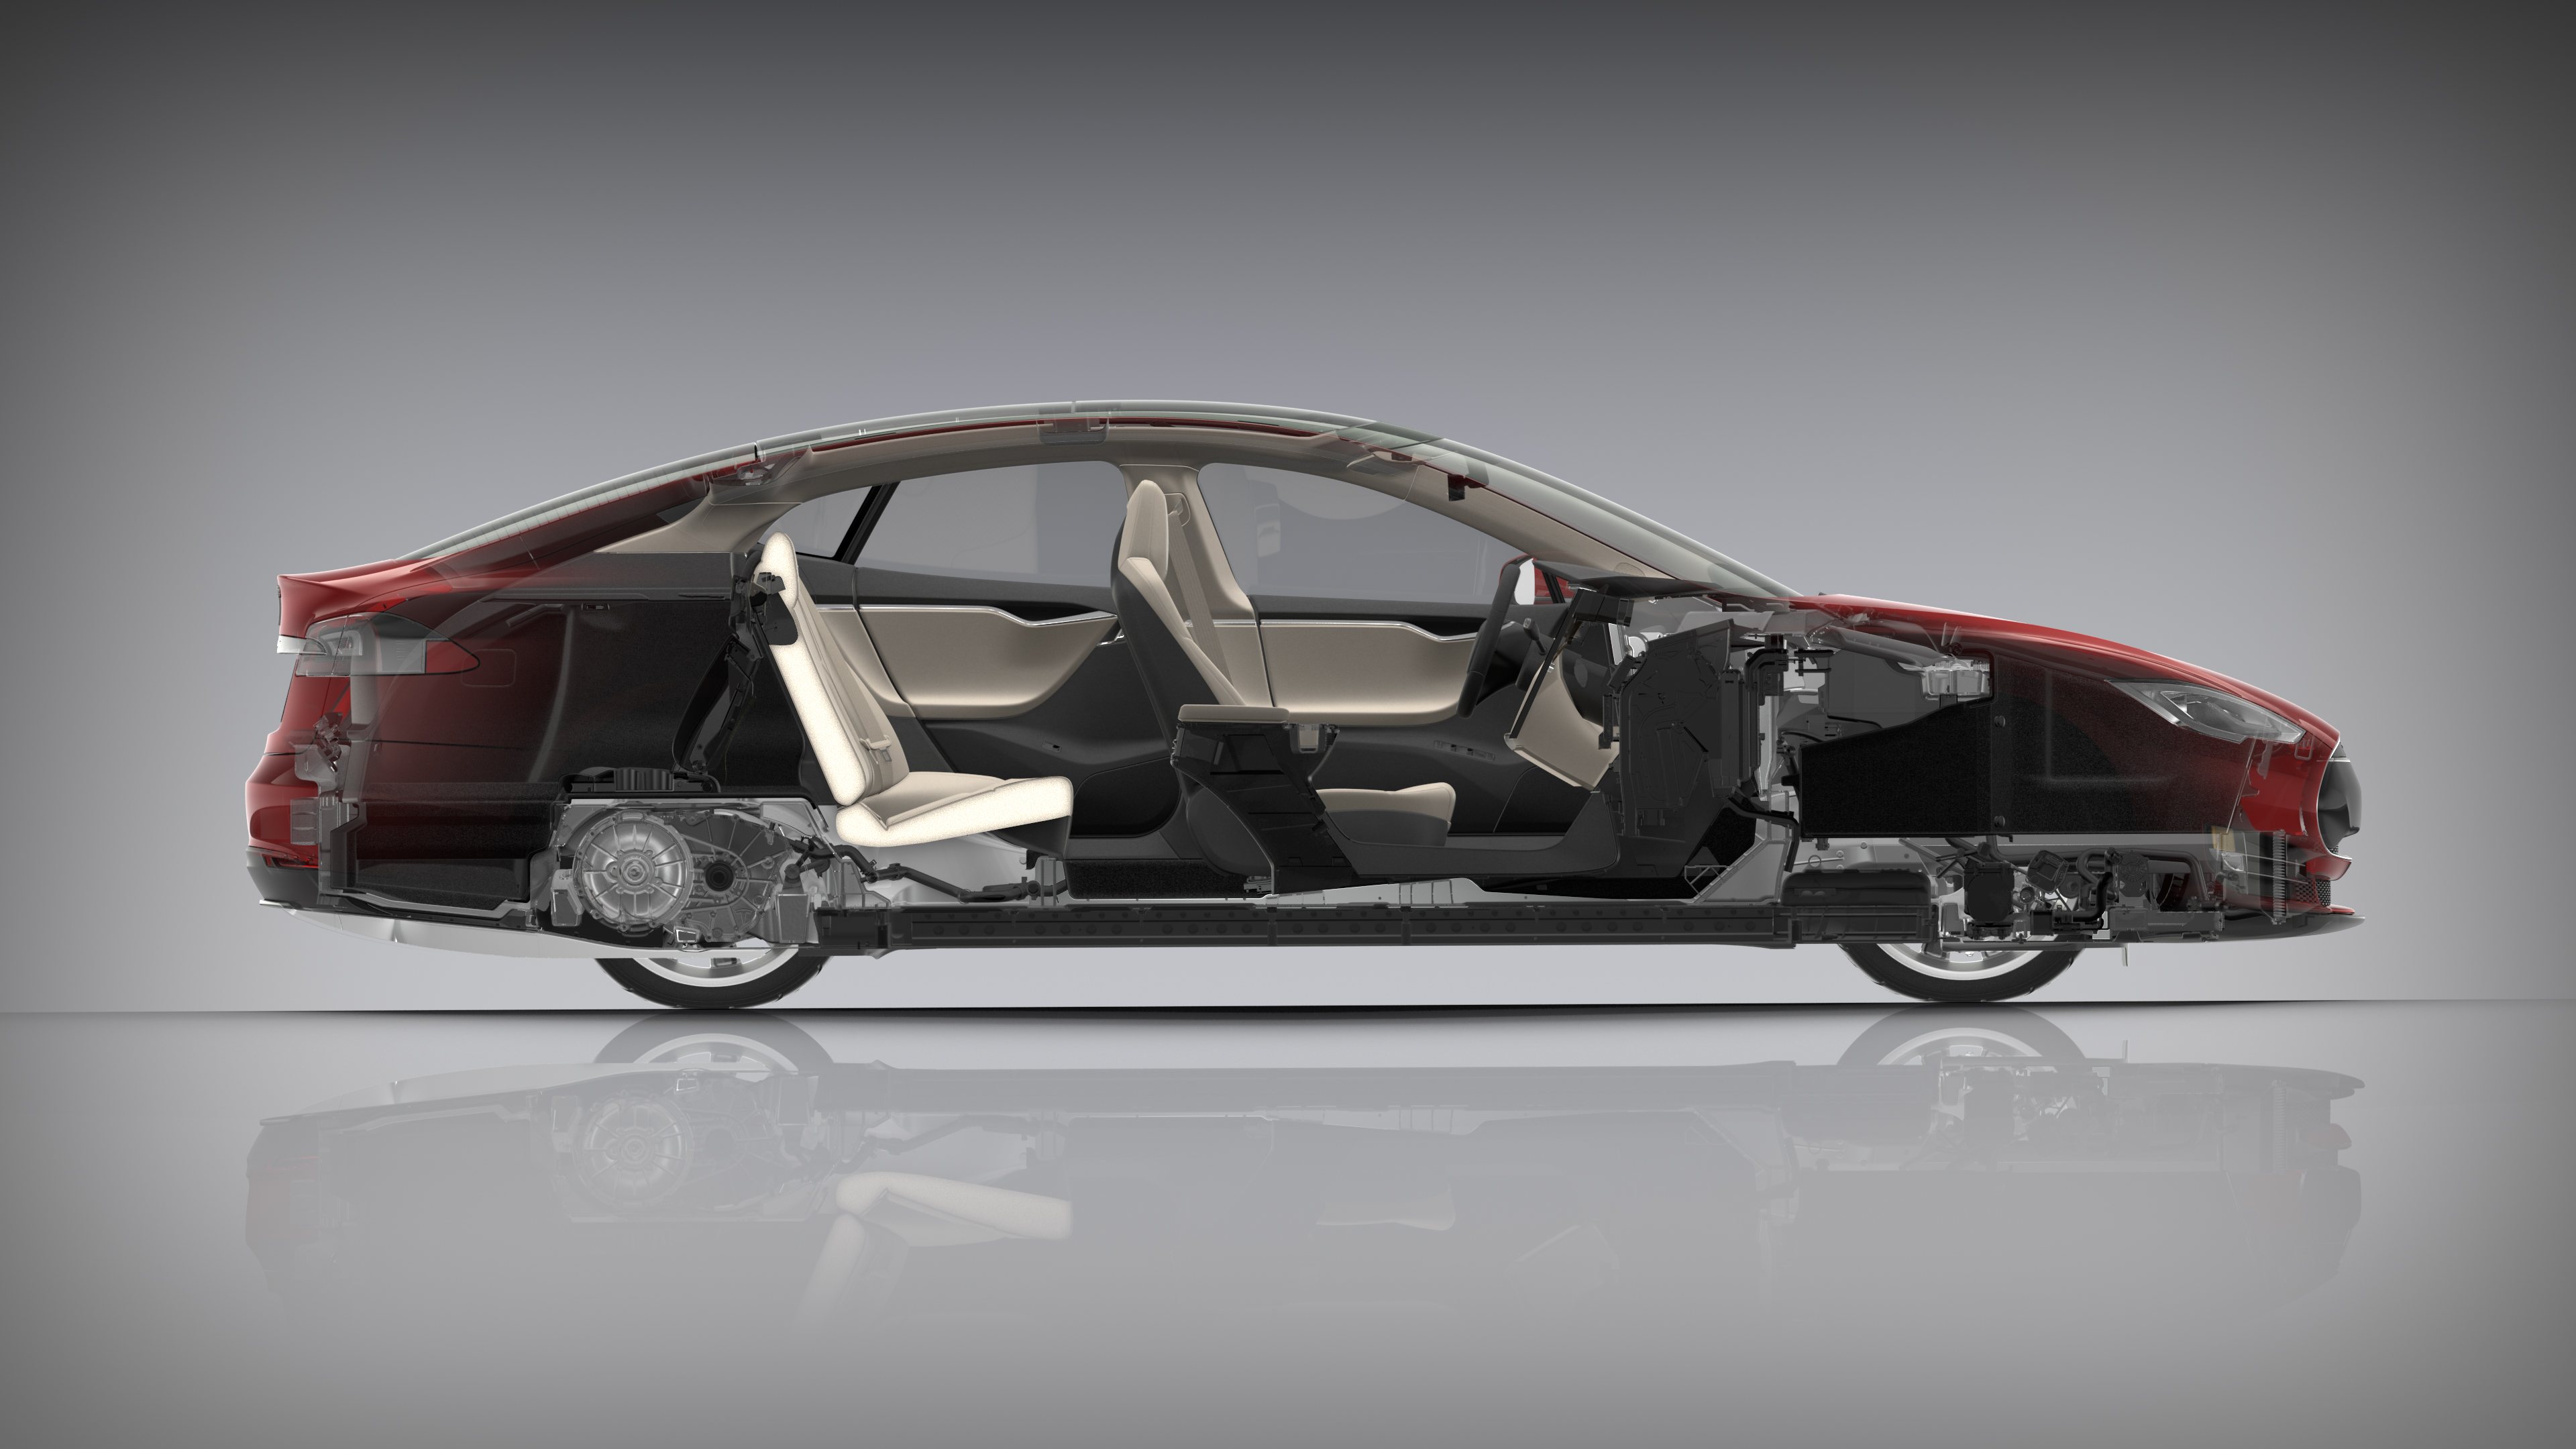 Tesla Model S Cutaway Image Courtesy Car Wallpaper HD